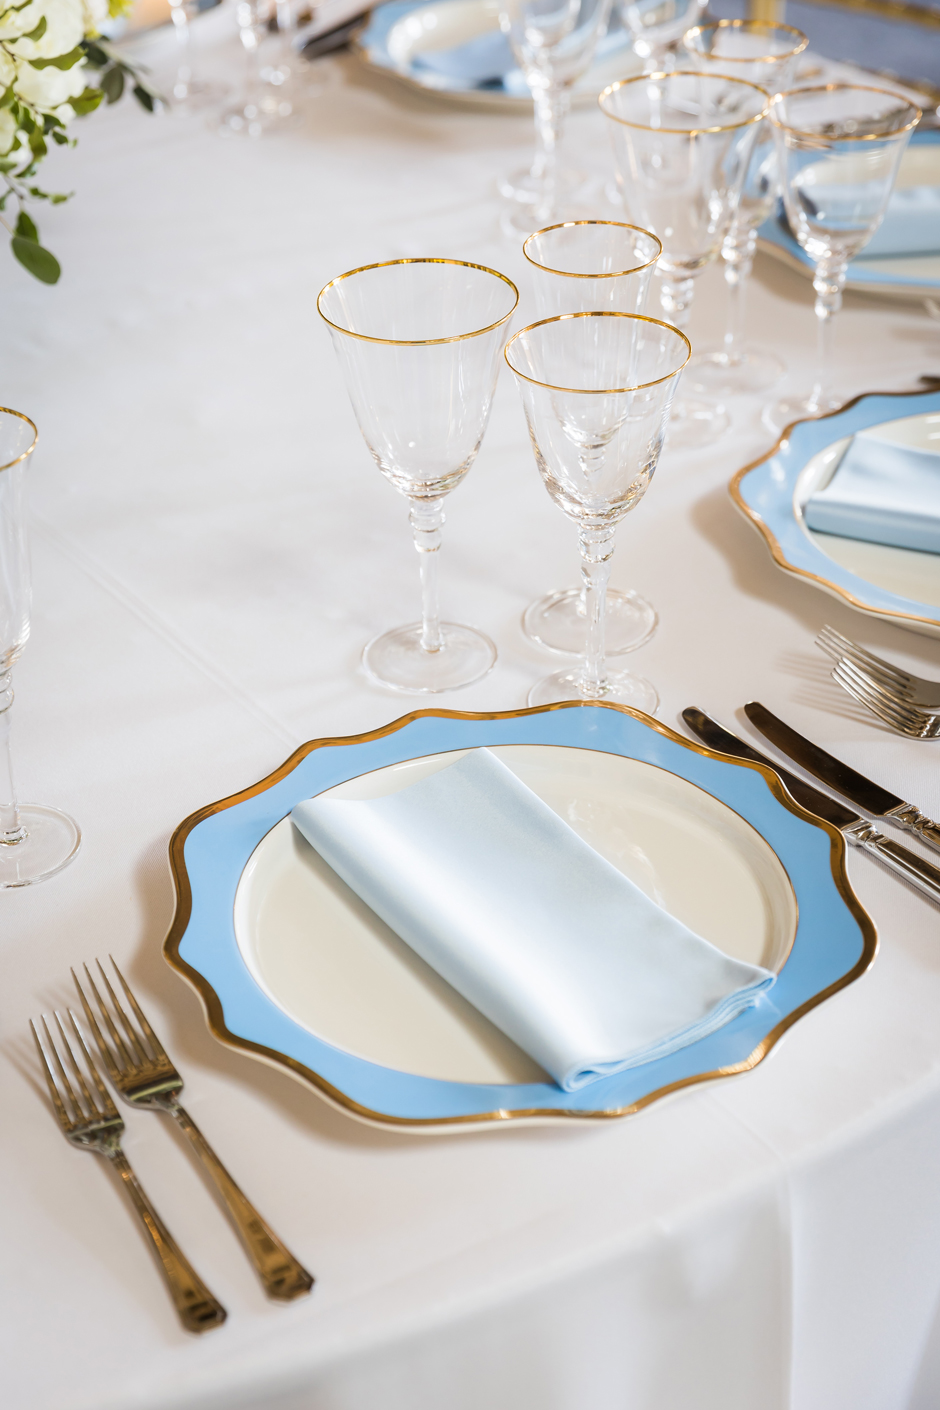 Blue & gold trim Porcelain charegr plate with white Essential linen, powder blue Verona napkin and gold trim glasses.